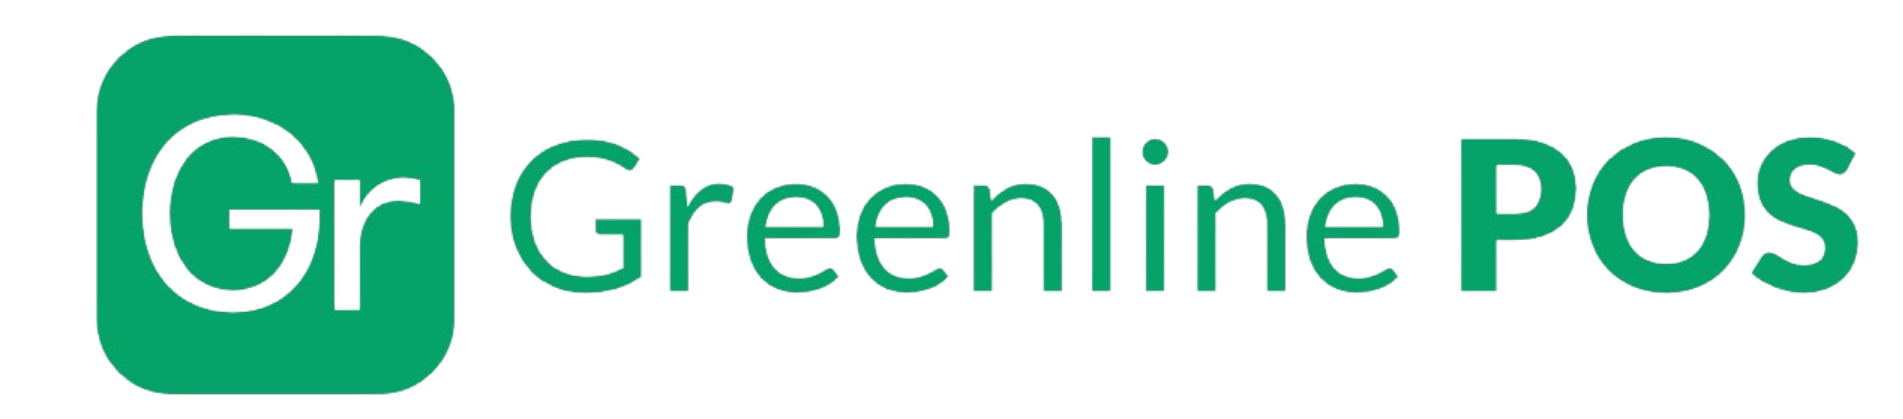 Greenline_Full Logo_No Background